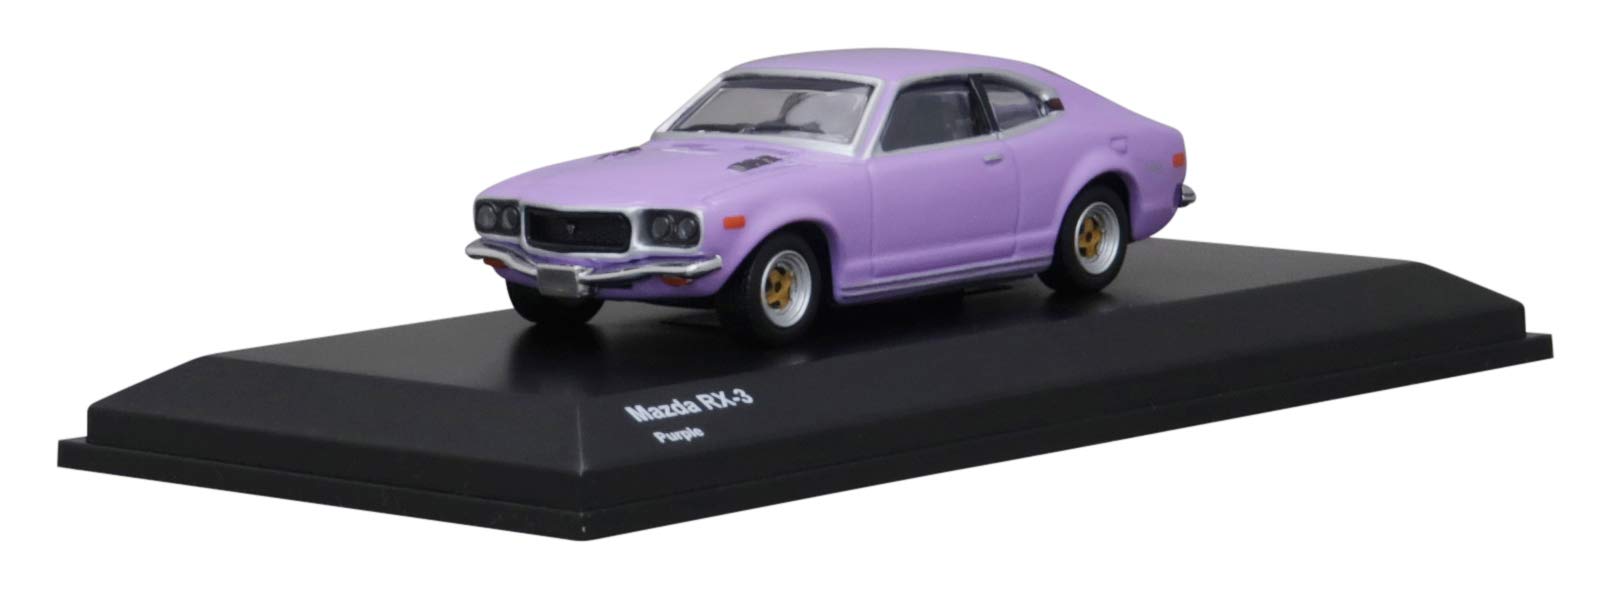 Kyosho 1/64 Mazda Rx-3 Purple Limited